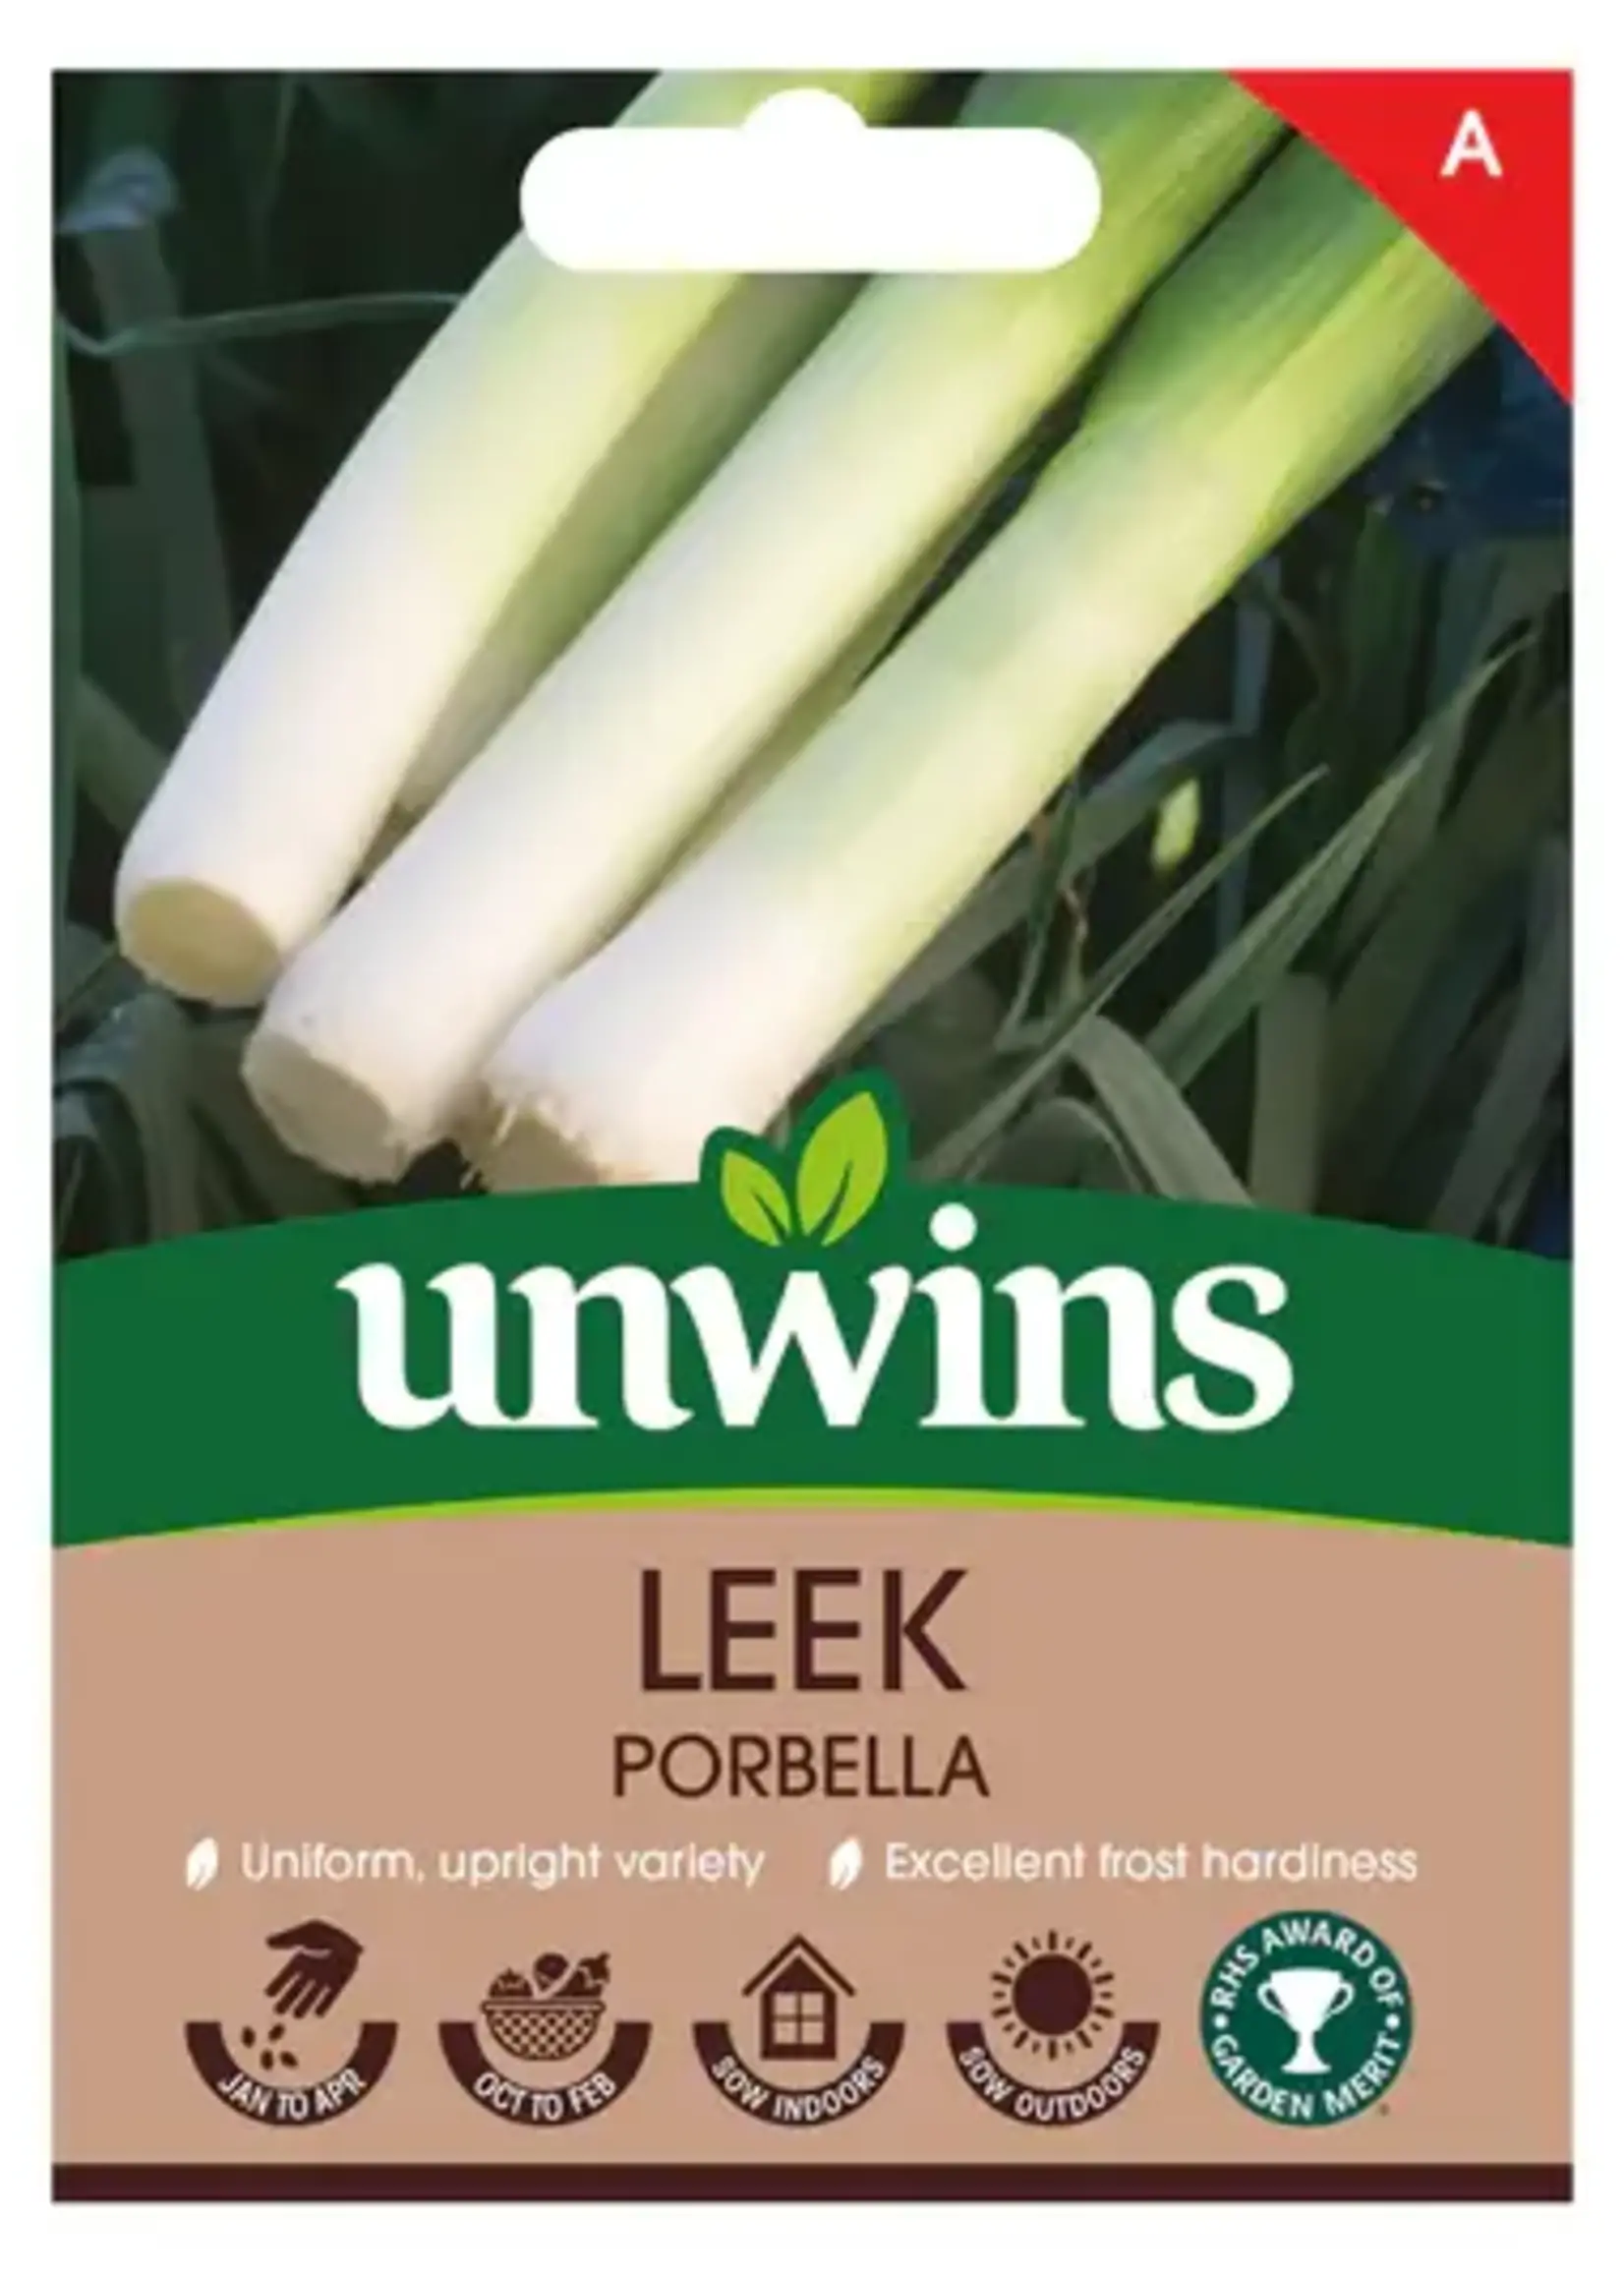 Unwins Leek - Porbella